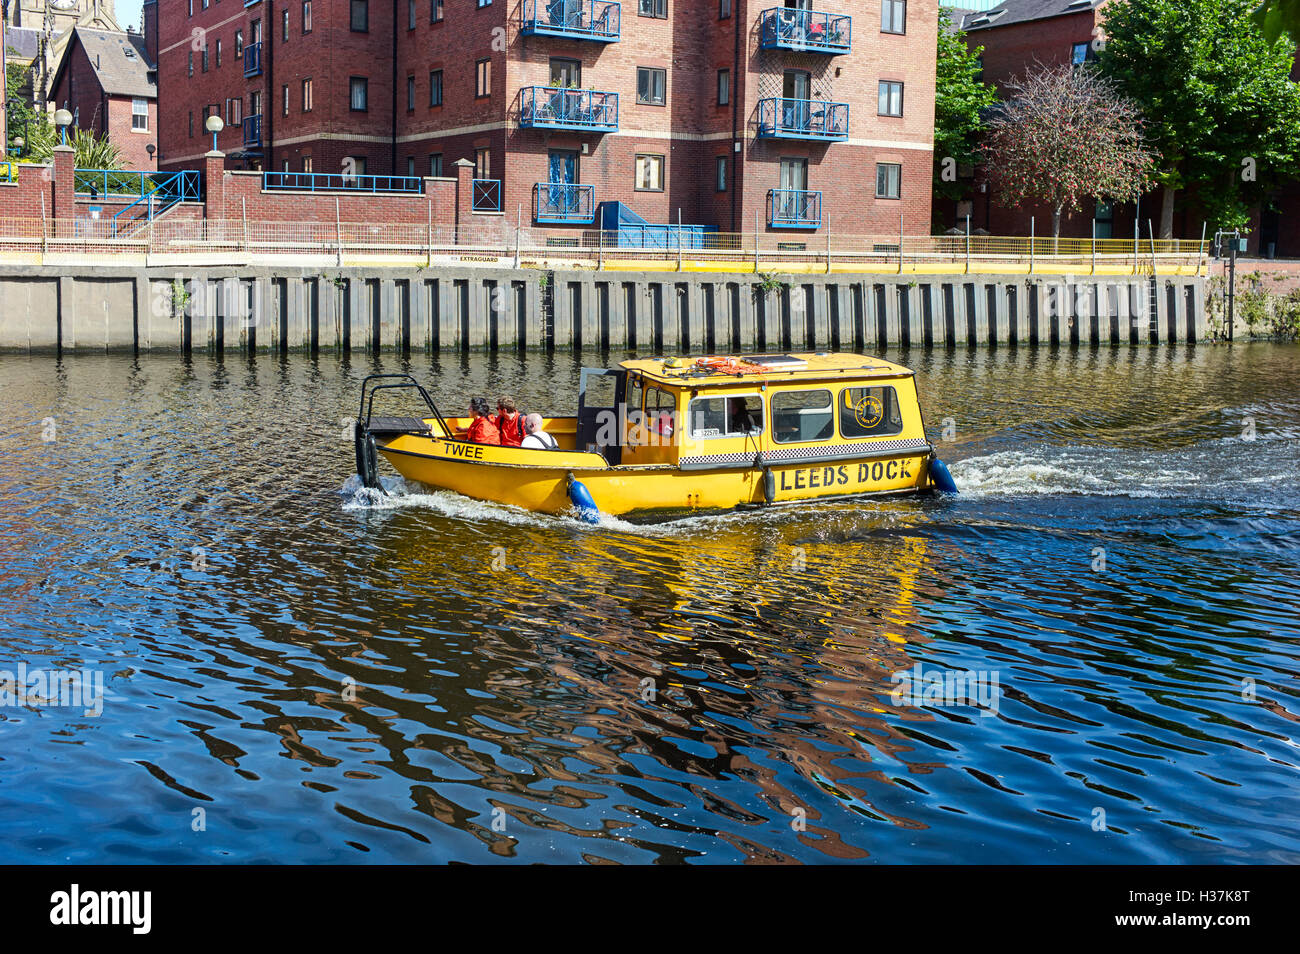 Water taxi in Leeds dock Stock Photo